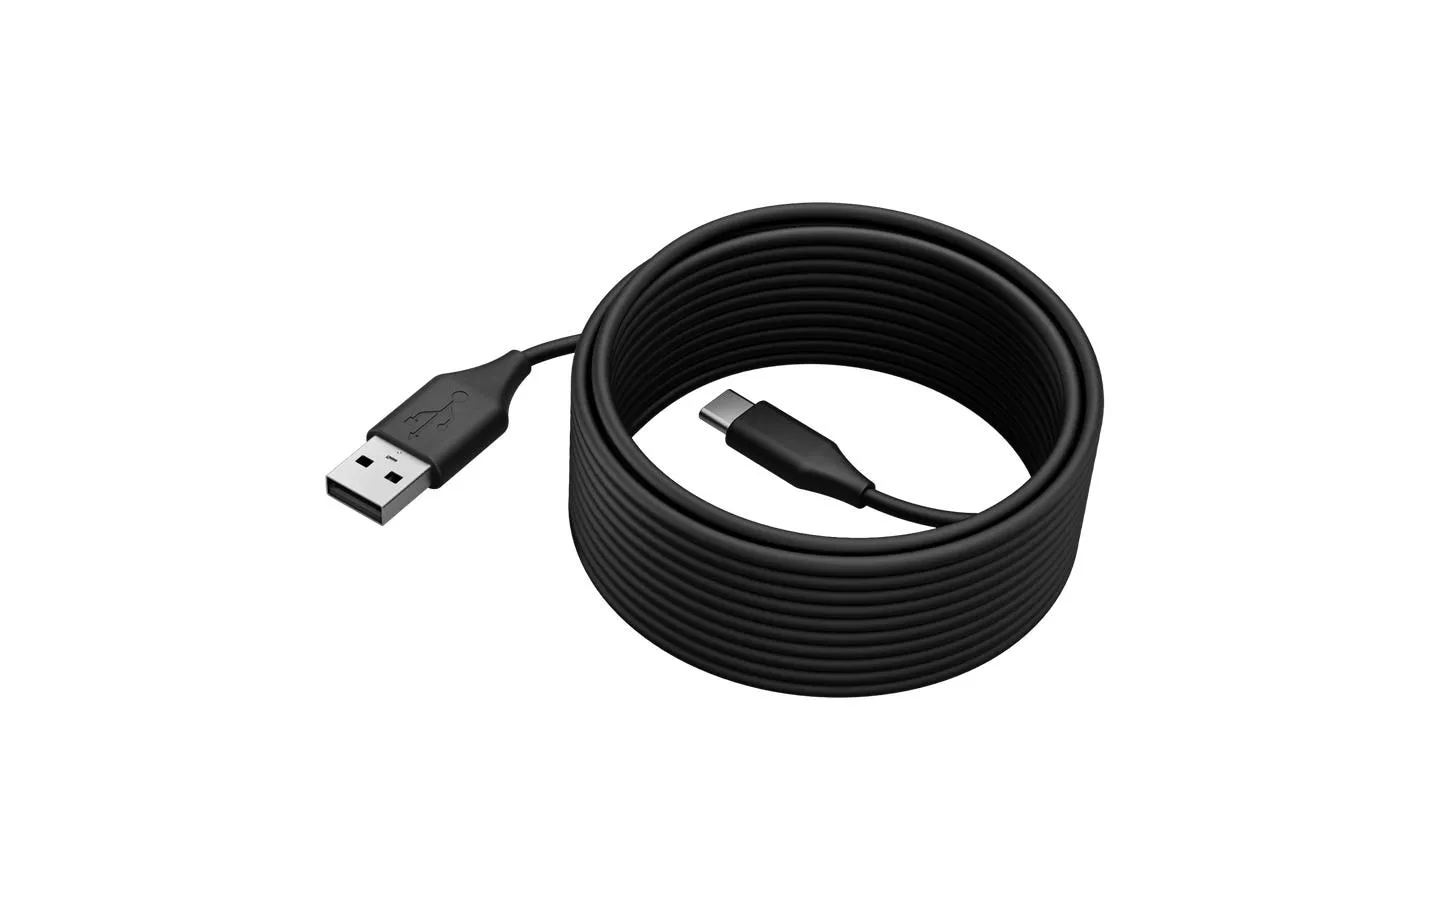 Kabel USB-C zu USB-A 5m für PanaCast 50